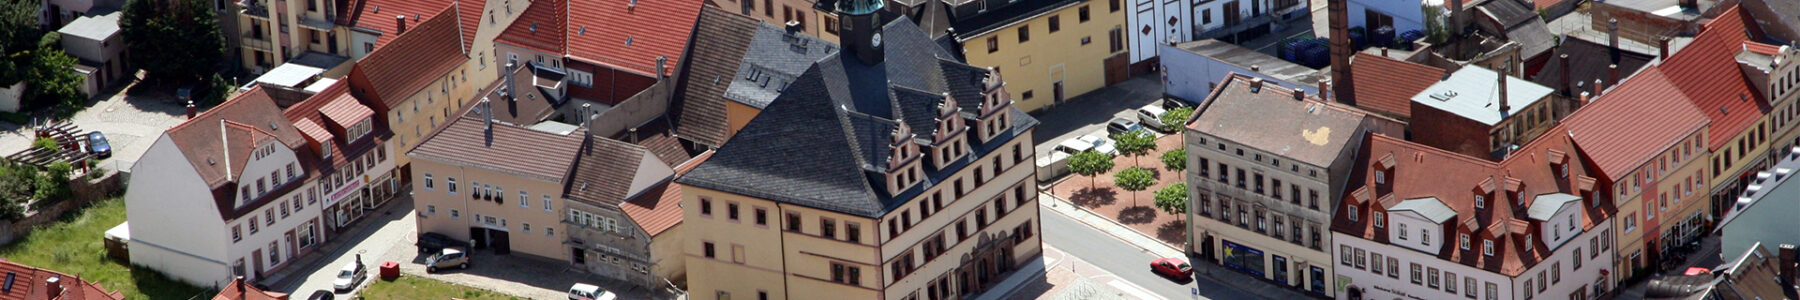 Penig Altstadt Luftaufnahme | Quelle: Stadt Penig